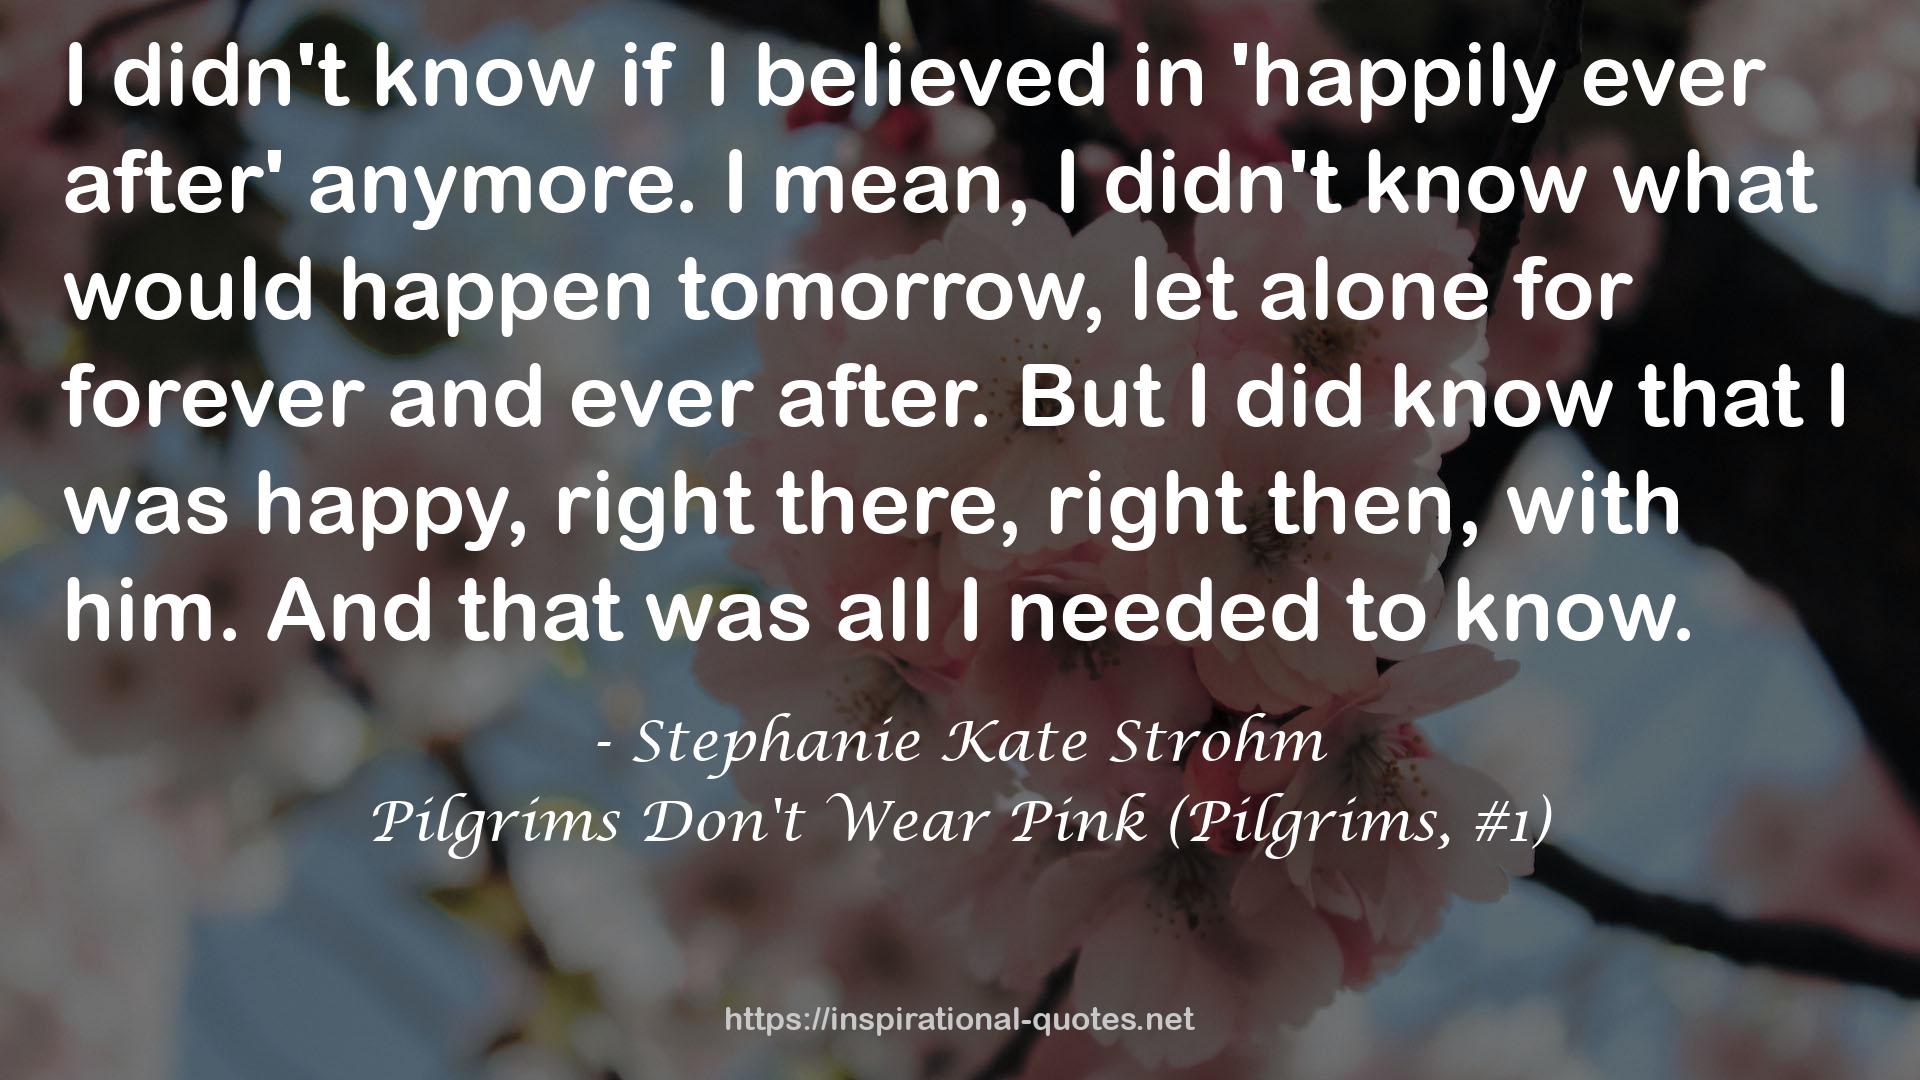 Pilgrims Don't Wear Pink (Pilgrims, #1) QUOTES